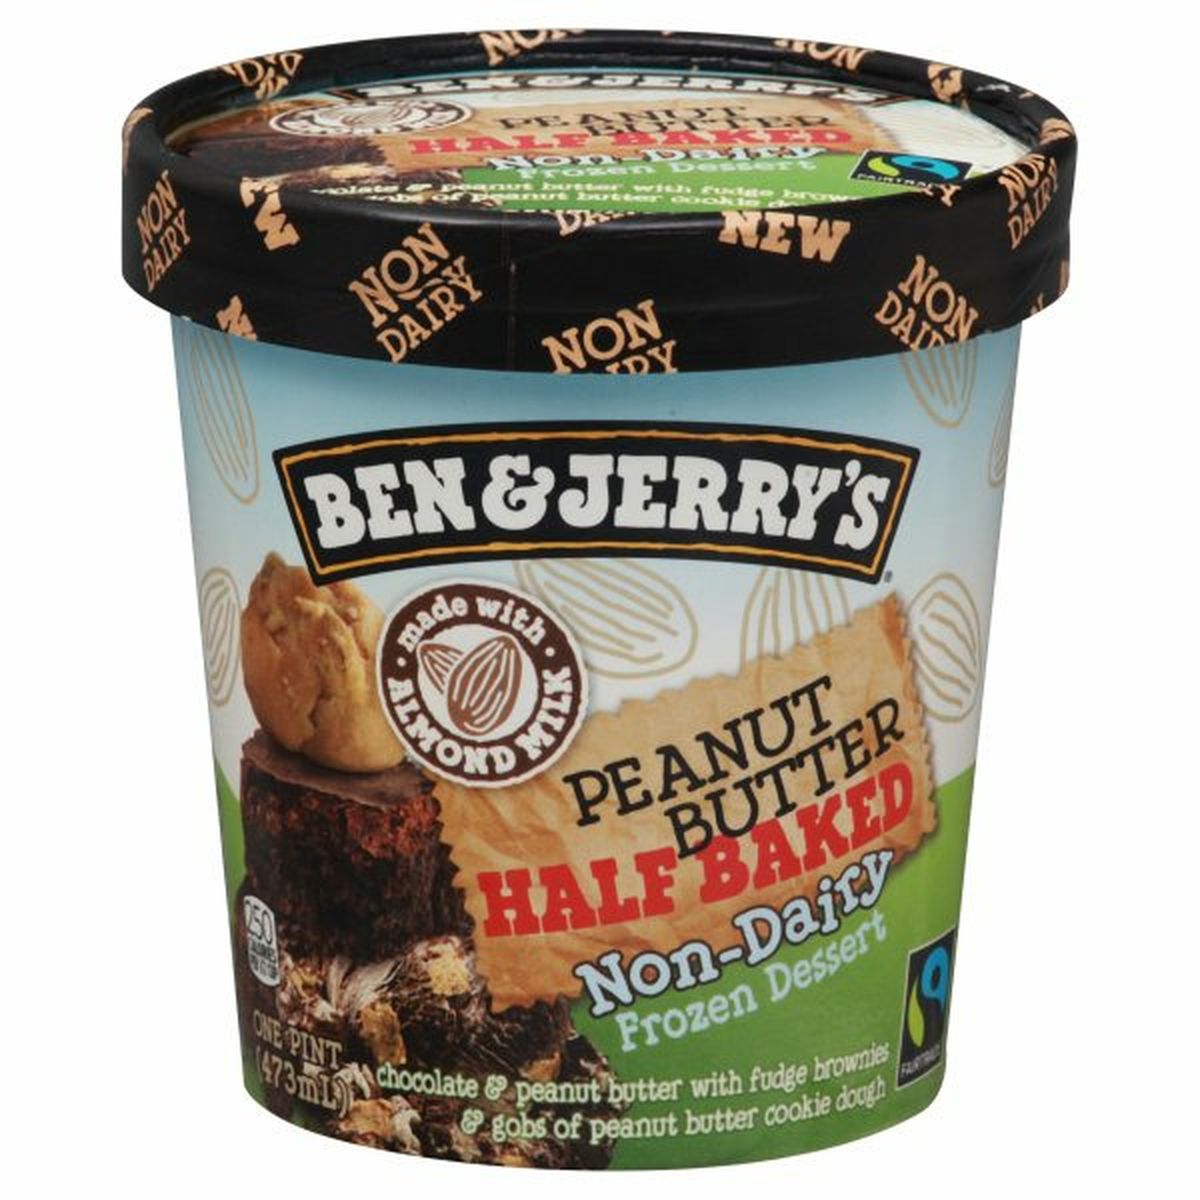 Calories in Ben & Jerry's Frozen Dessert, Non-Dairy, Peanut Butter, Half Baked